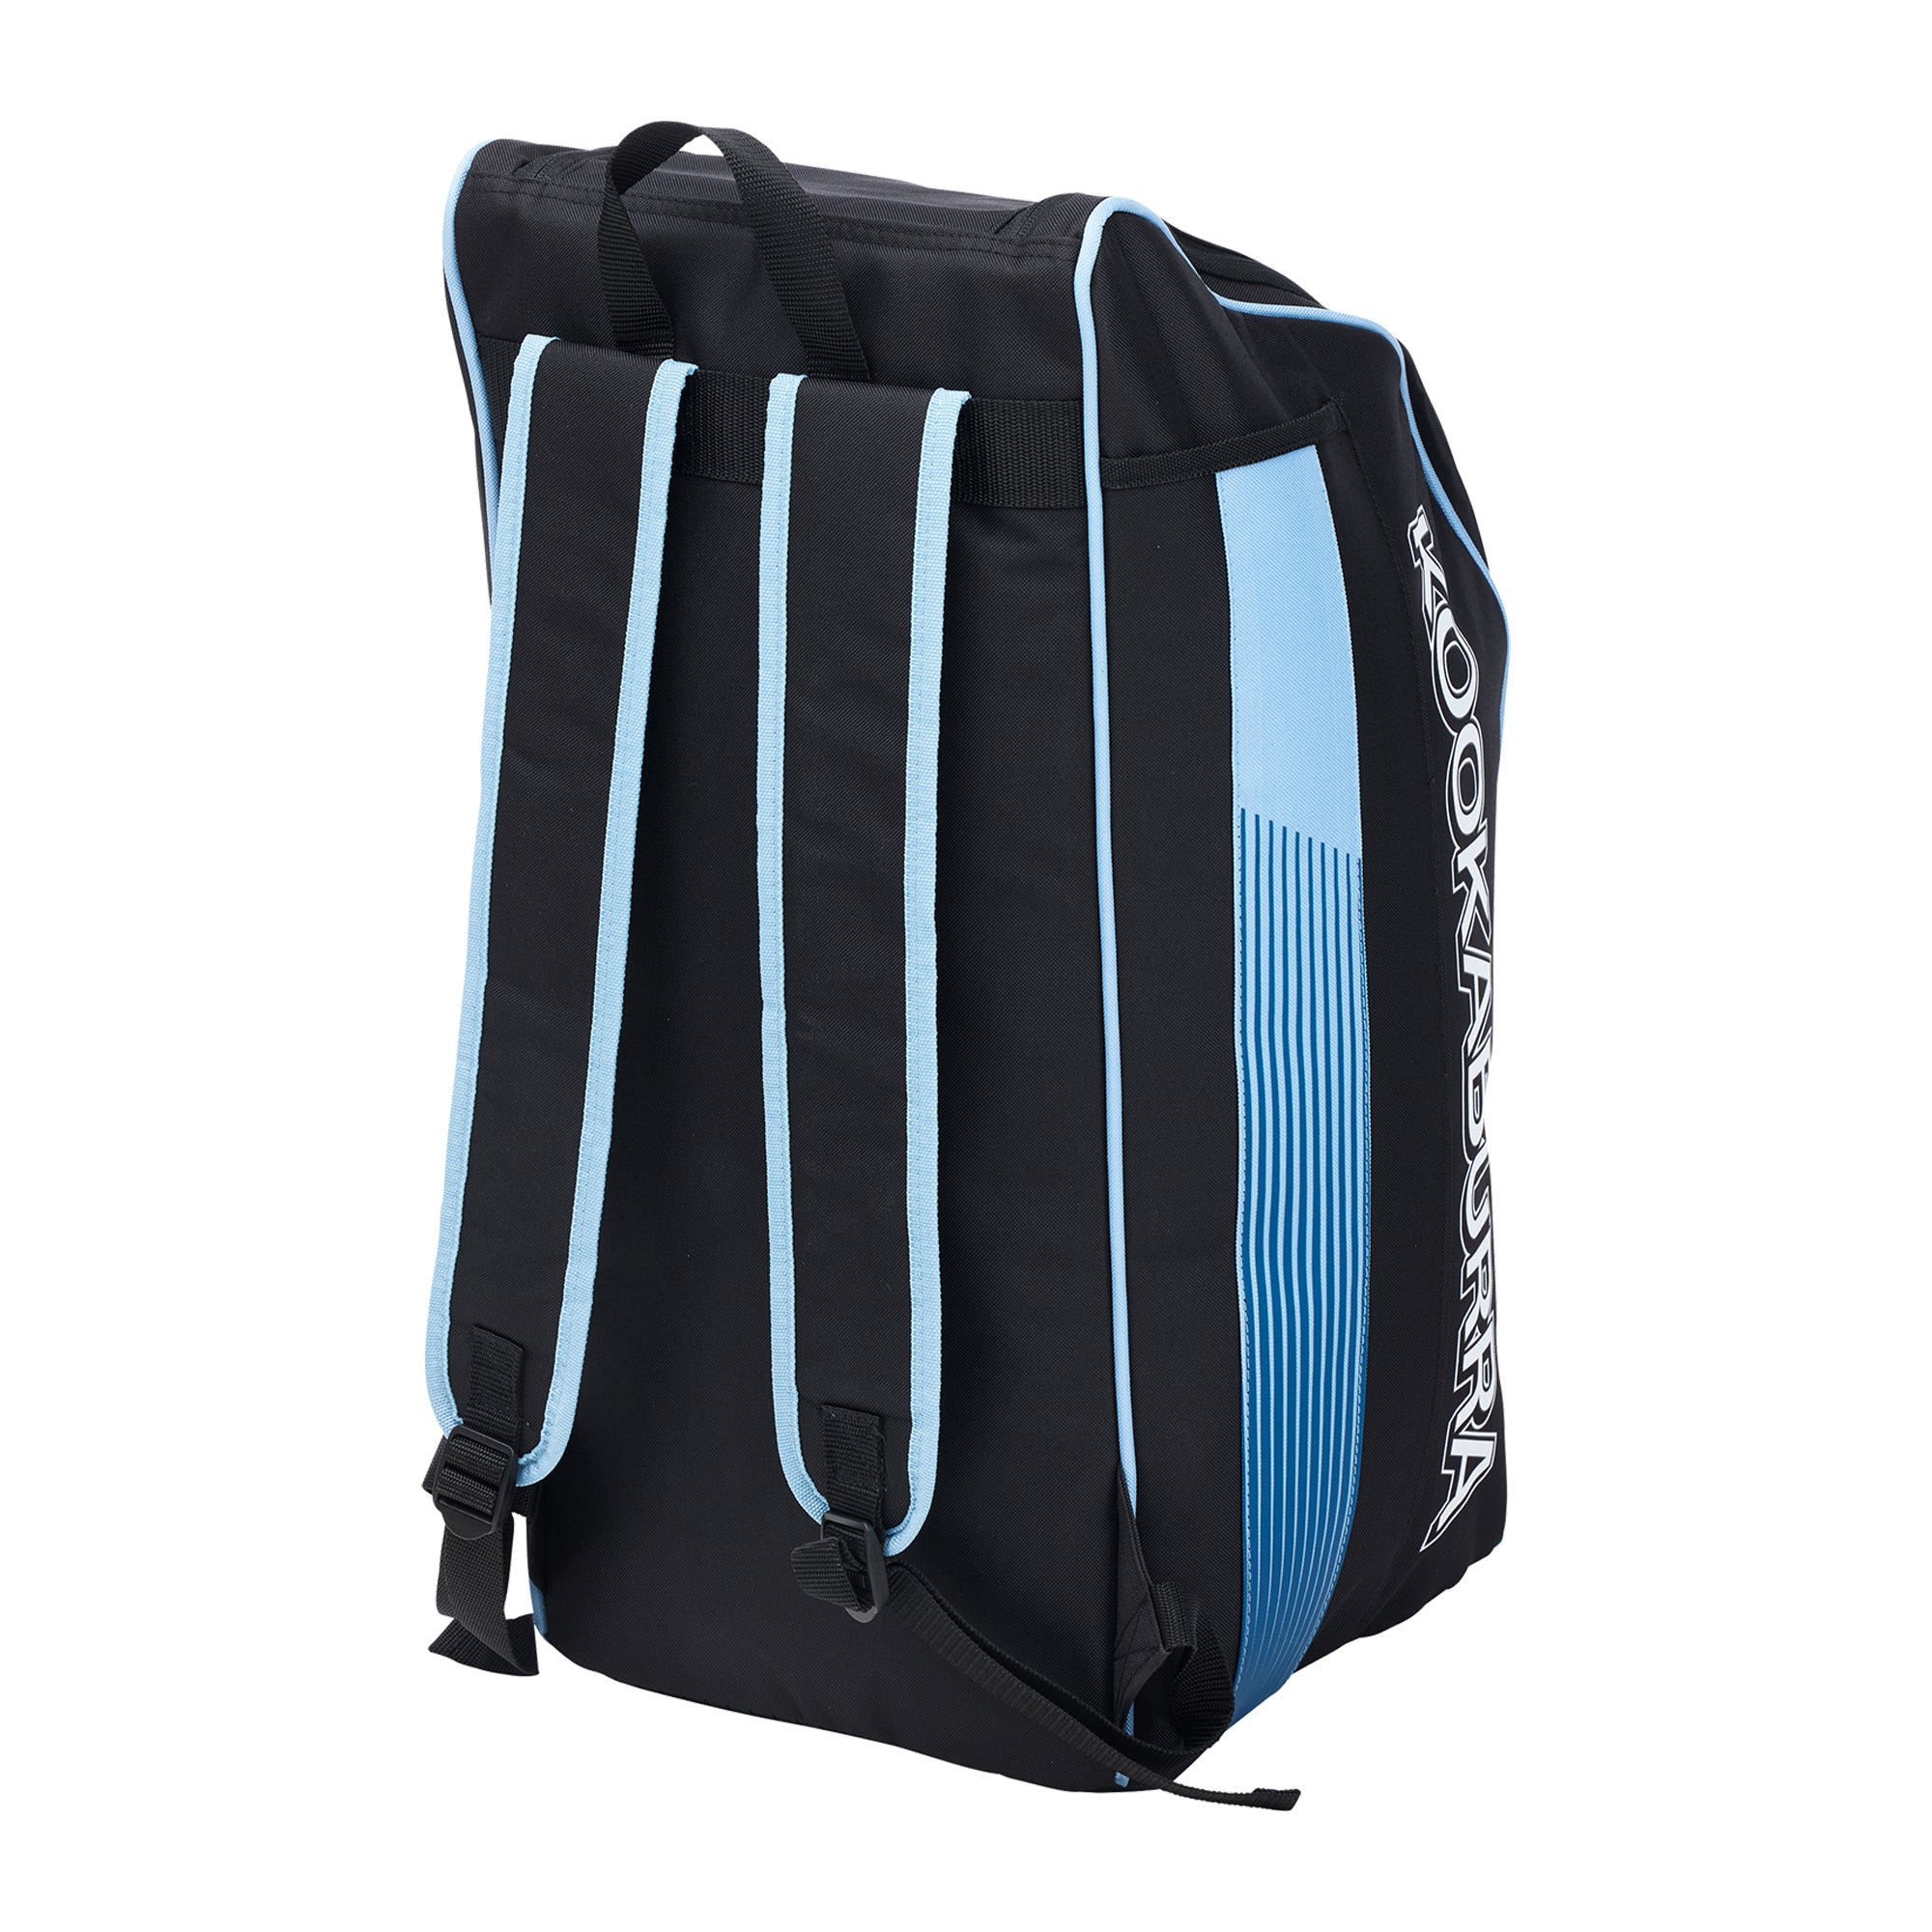 Kookaburra Pro 6.0 Duffle Cricket Kit Bag Black/Blue